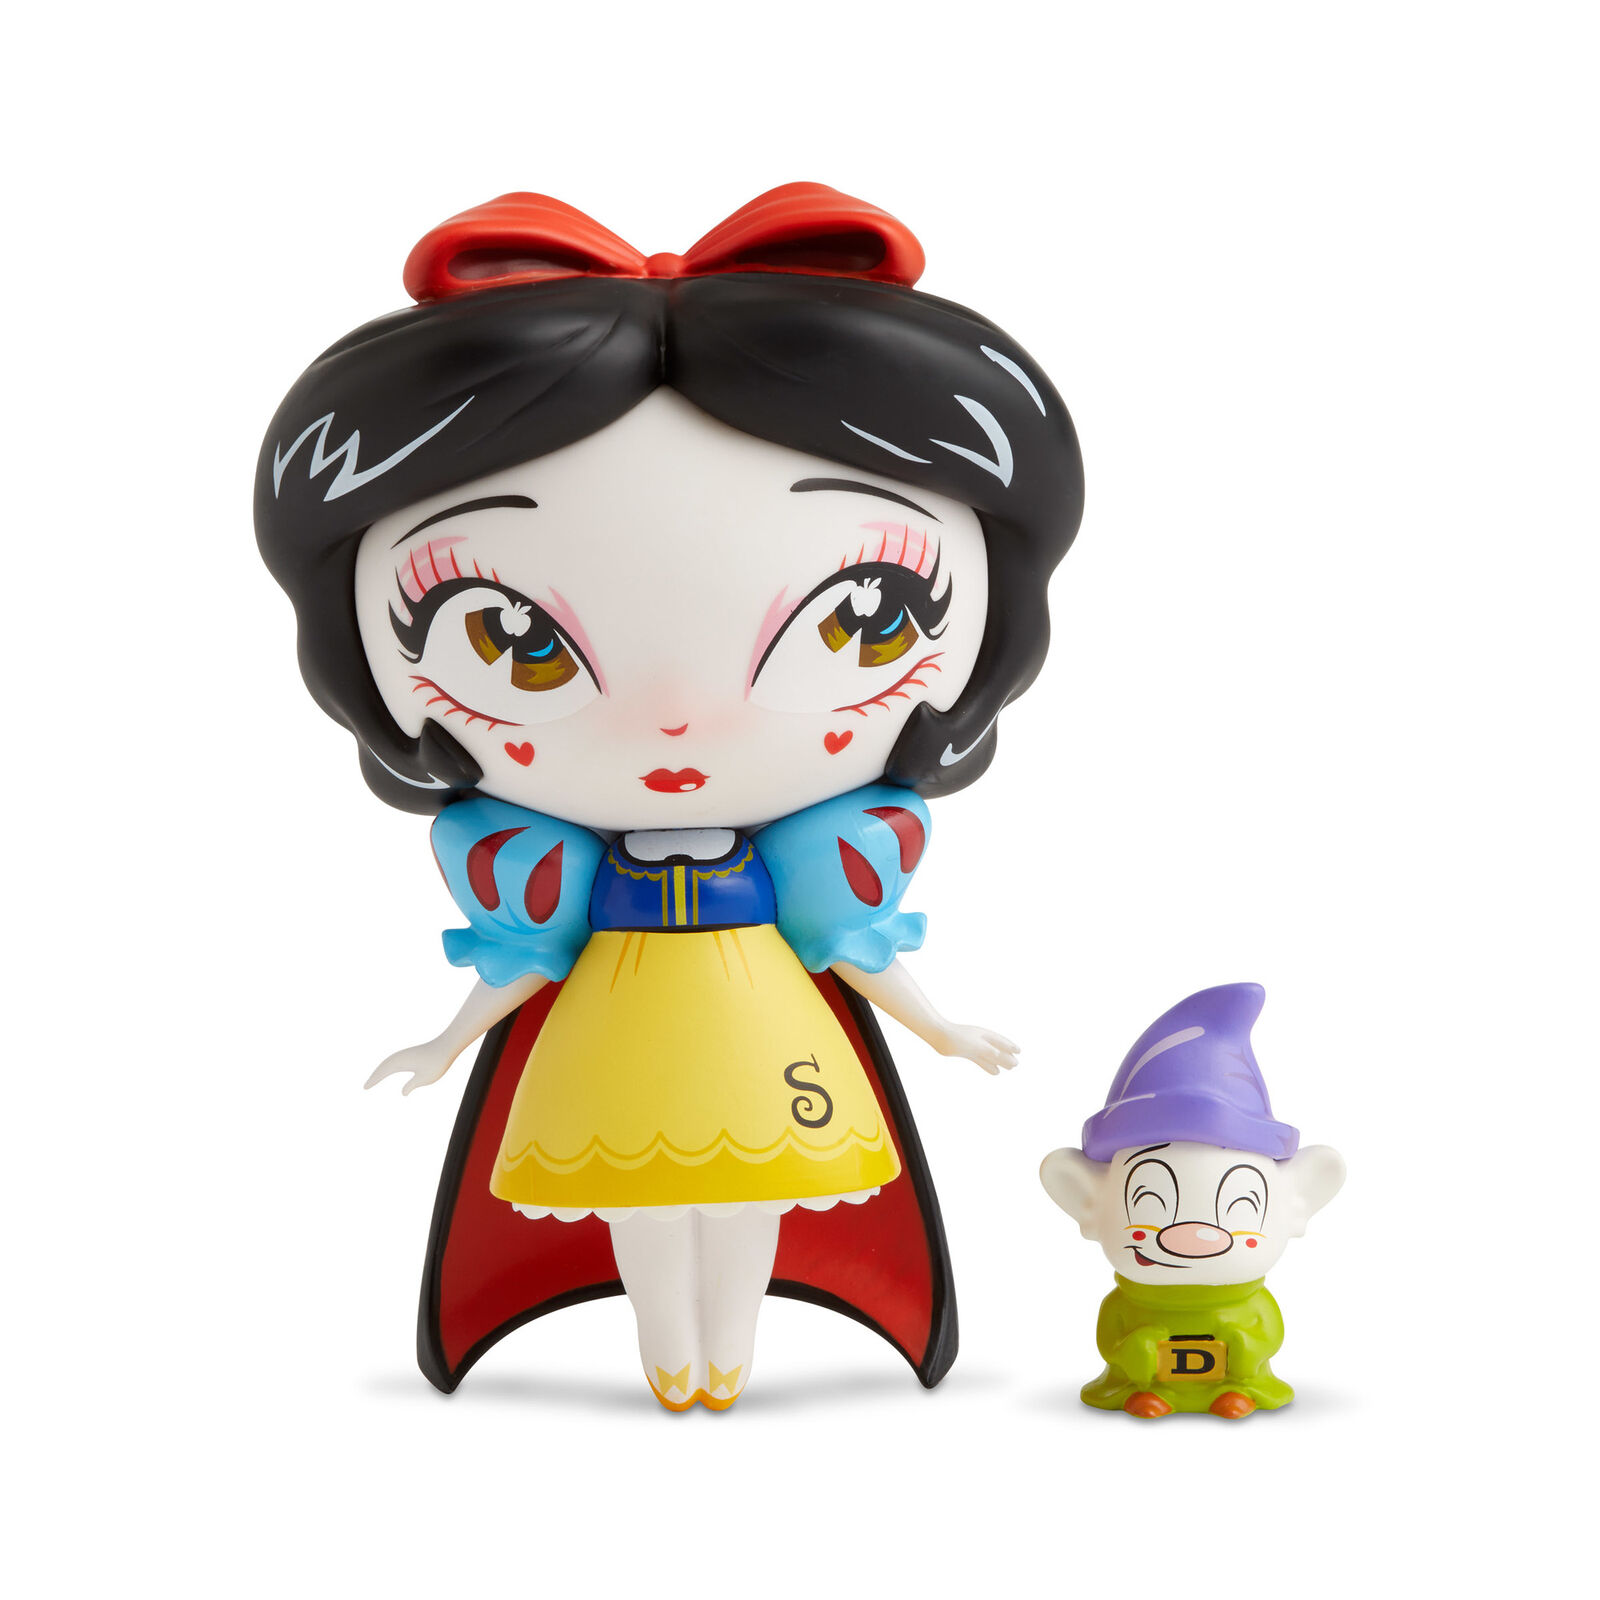 Enesco Miss Mindy Disney Snow White and the Seven Dwarfs Vinyl Figurine 7 Inch